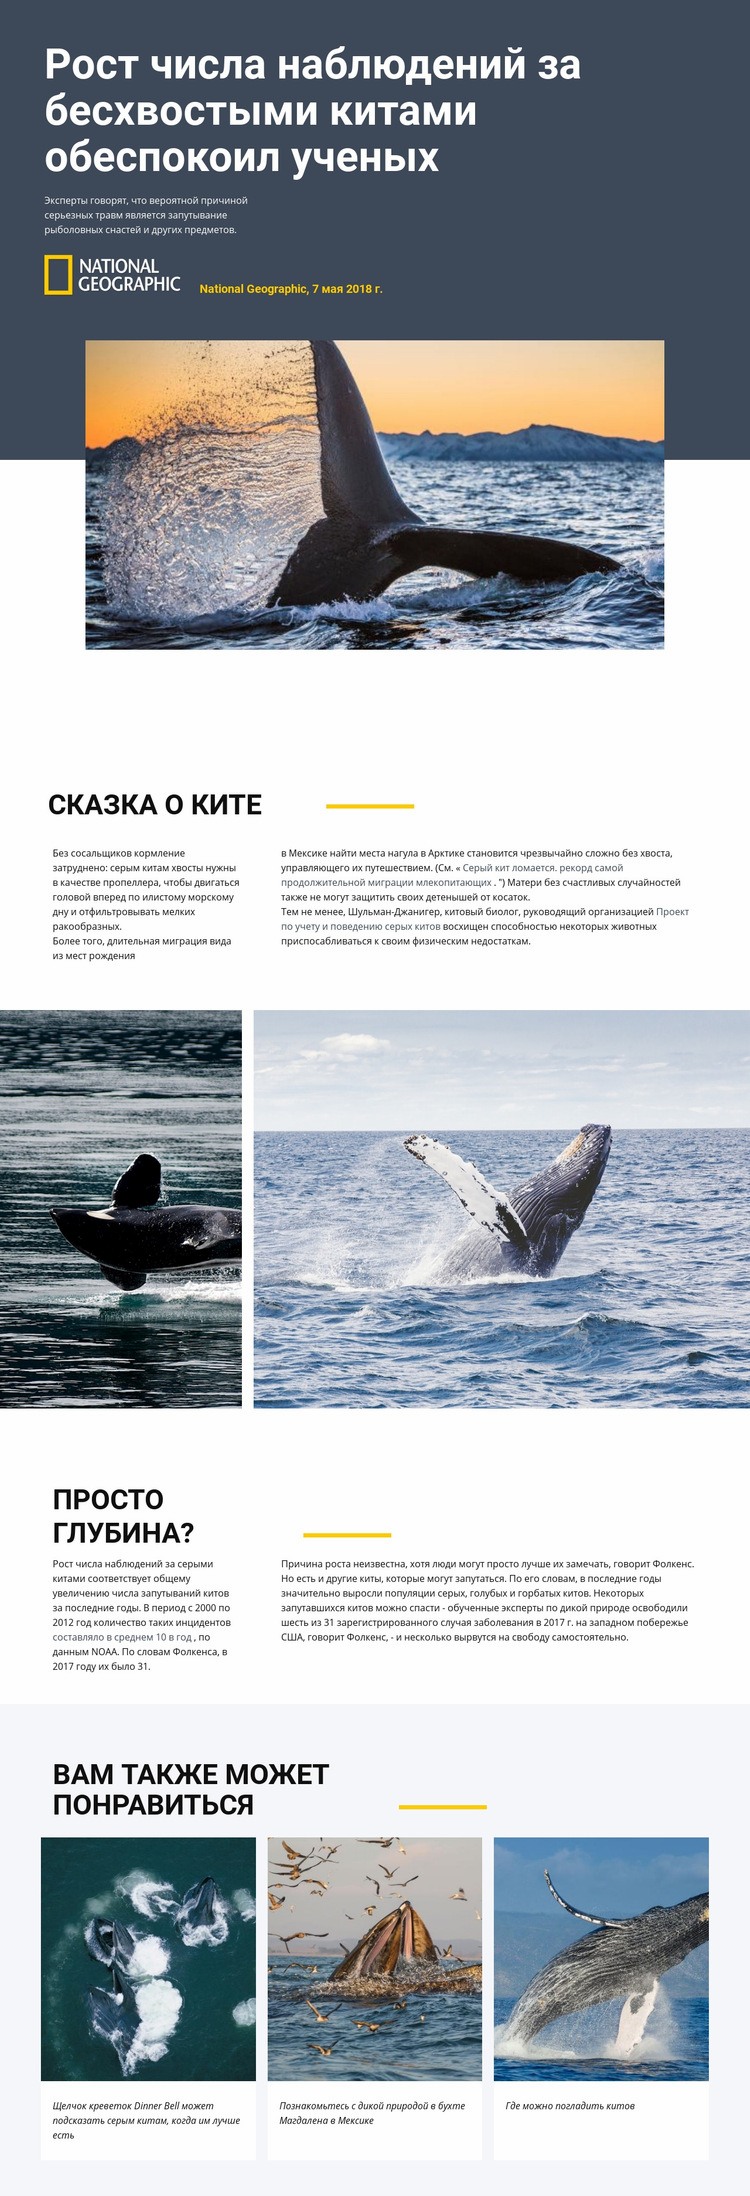 Центр наблюдения за китами WordPress тема